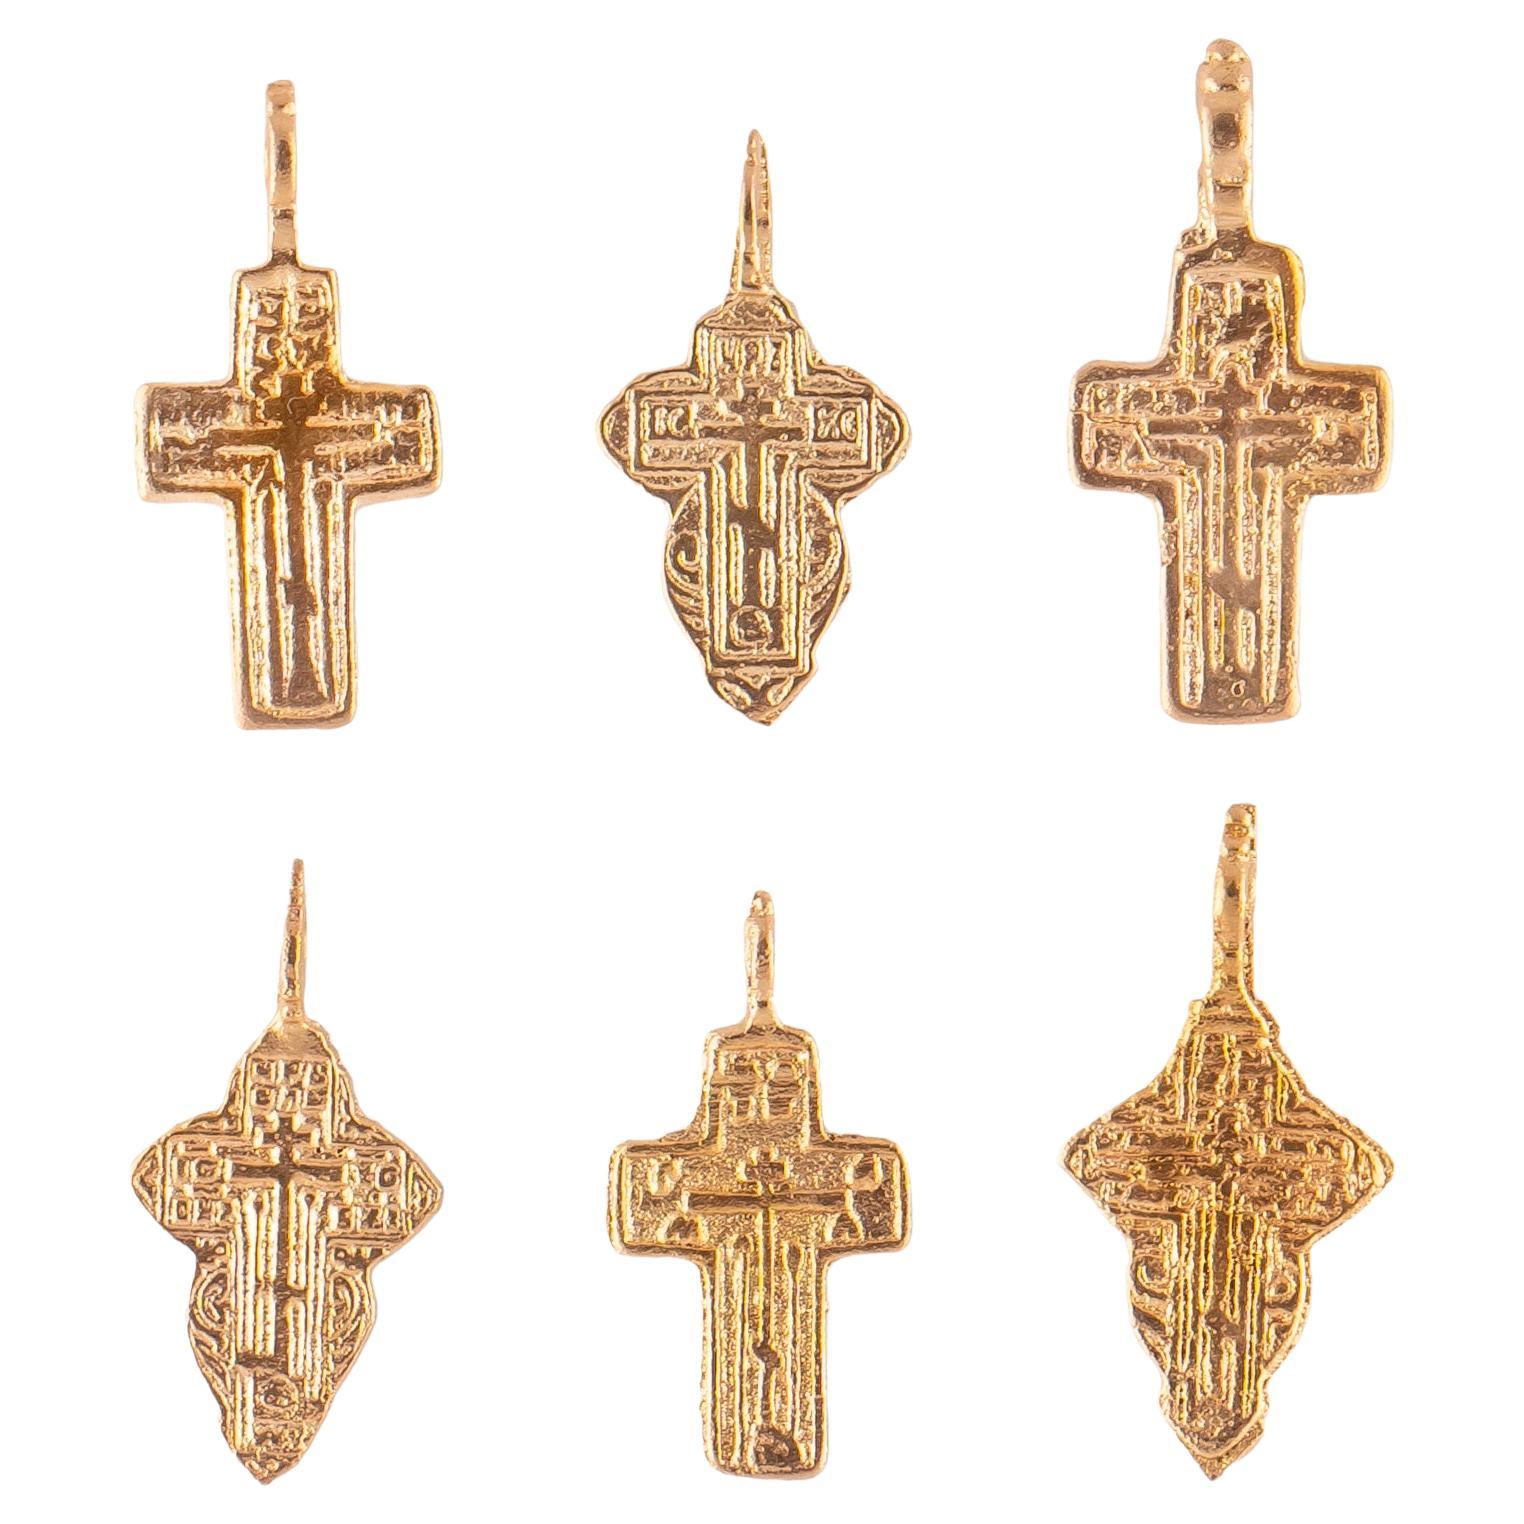 Six Russian Imperial-Era Old Believers’ Pendant Crosses, 19th Century